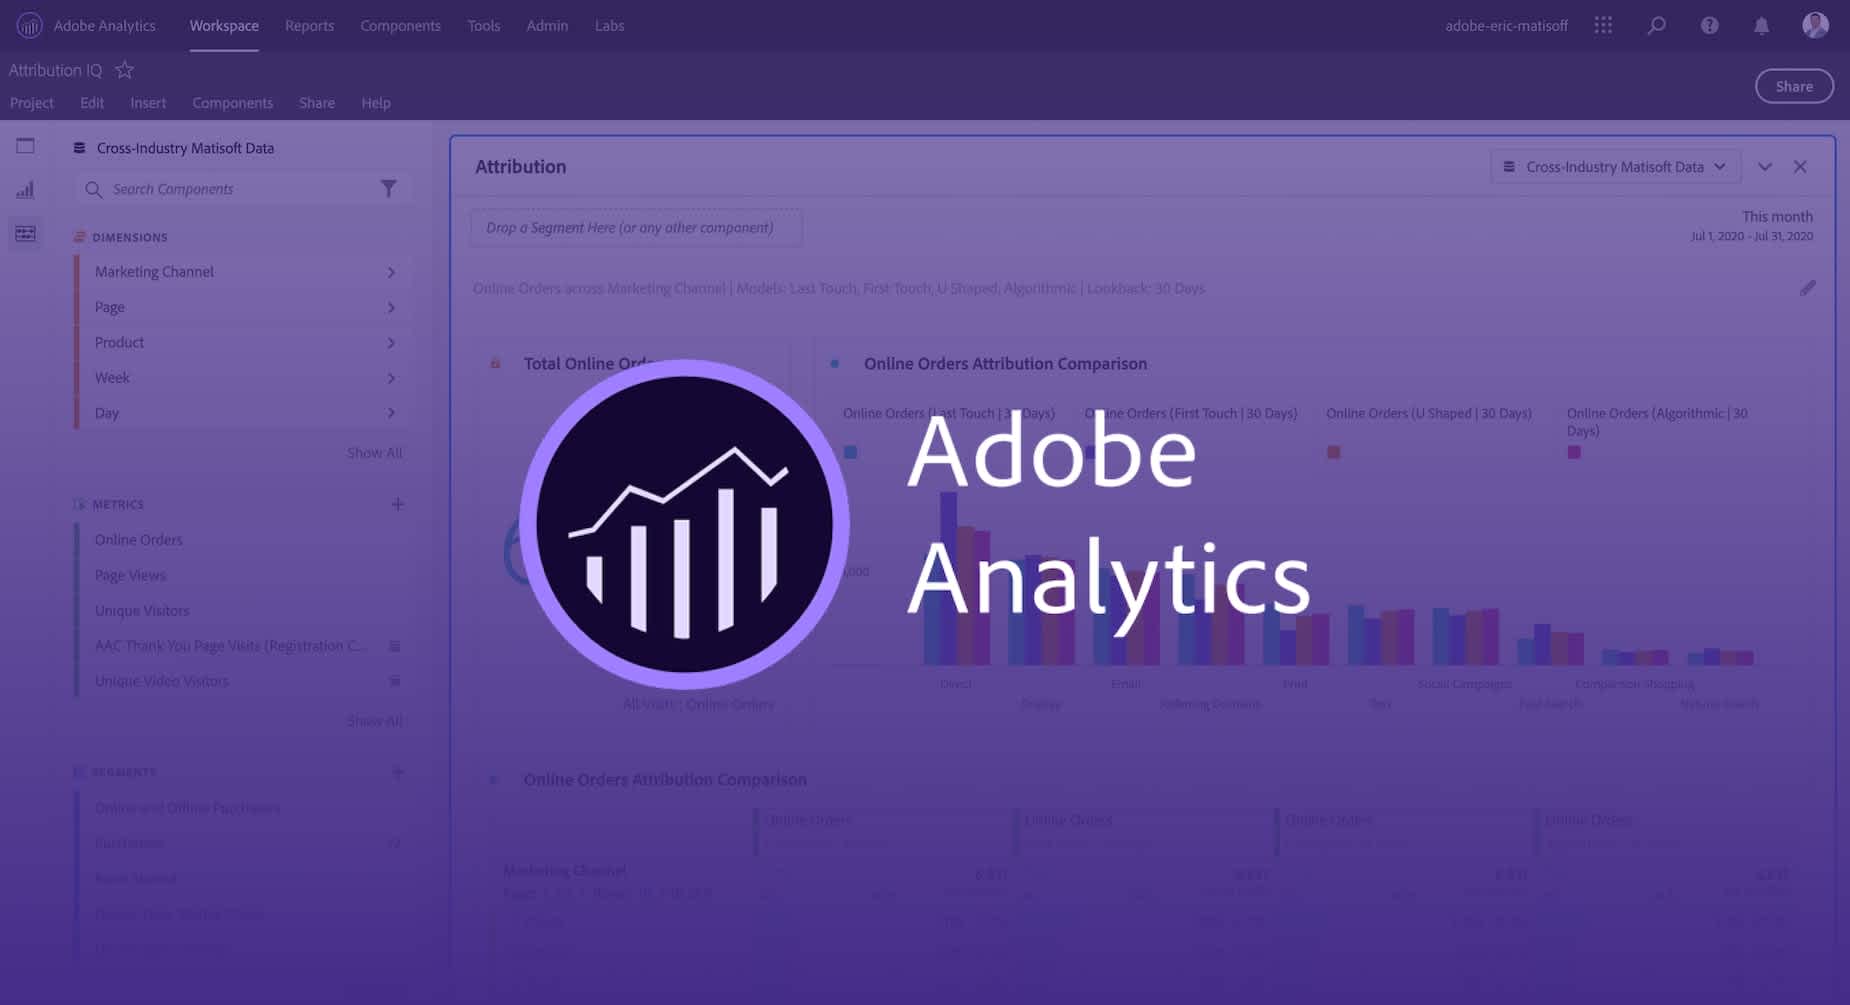 Adobe Analytics logo over a purple background